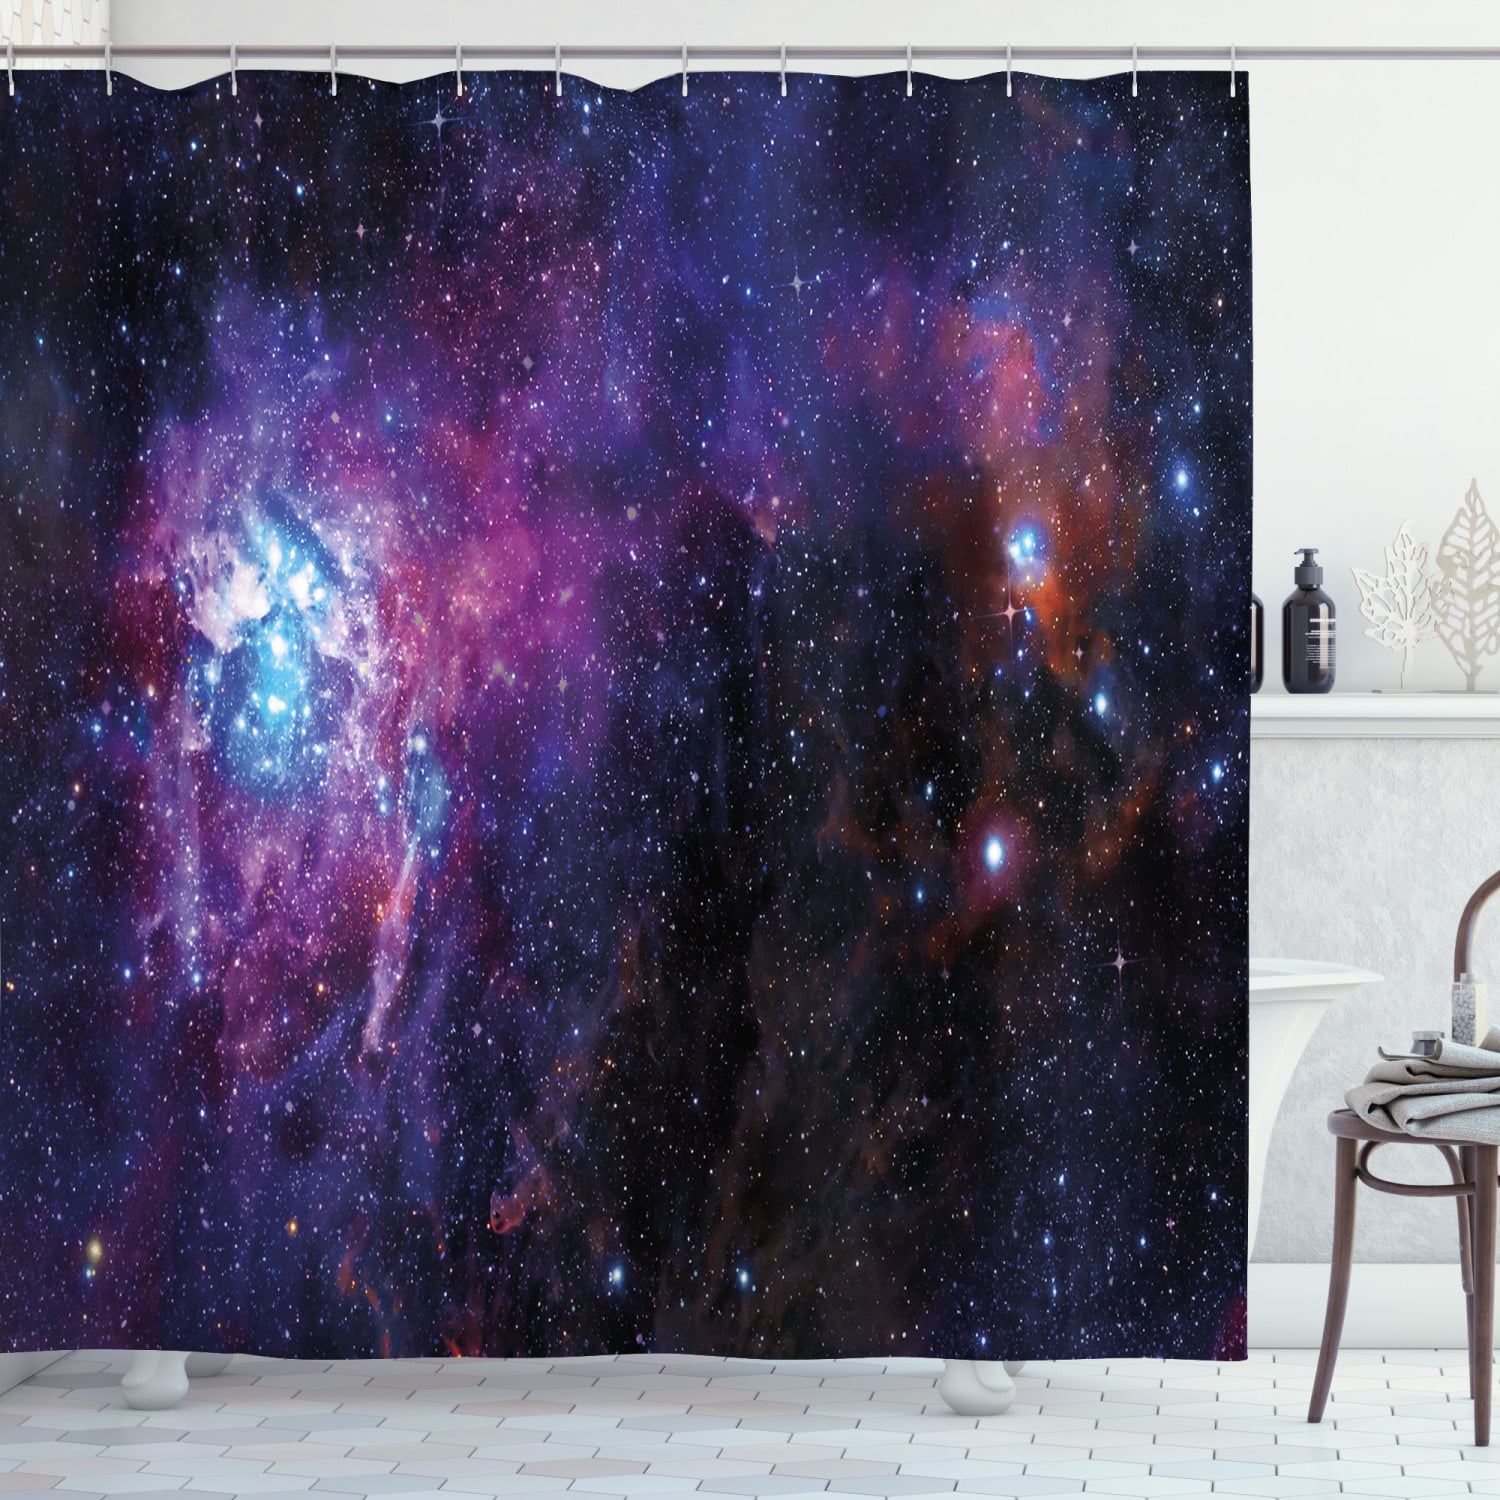 Nebula Galaxy Bathroom Shower Curtain Waterproof Fabric w/12 Hooks 71*71inch 